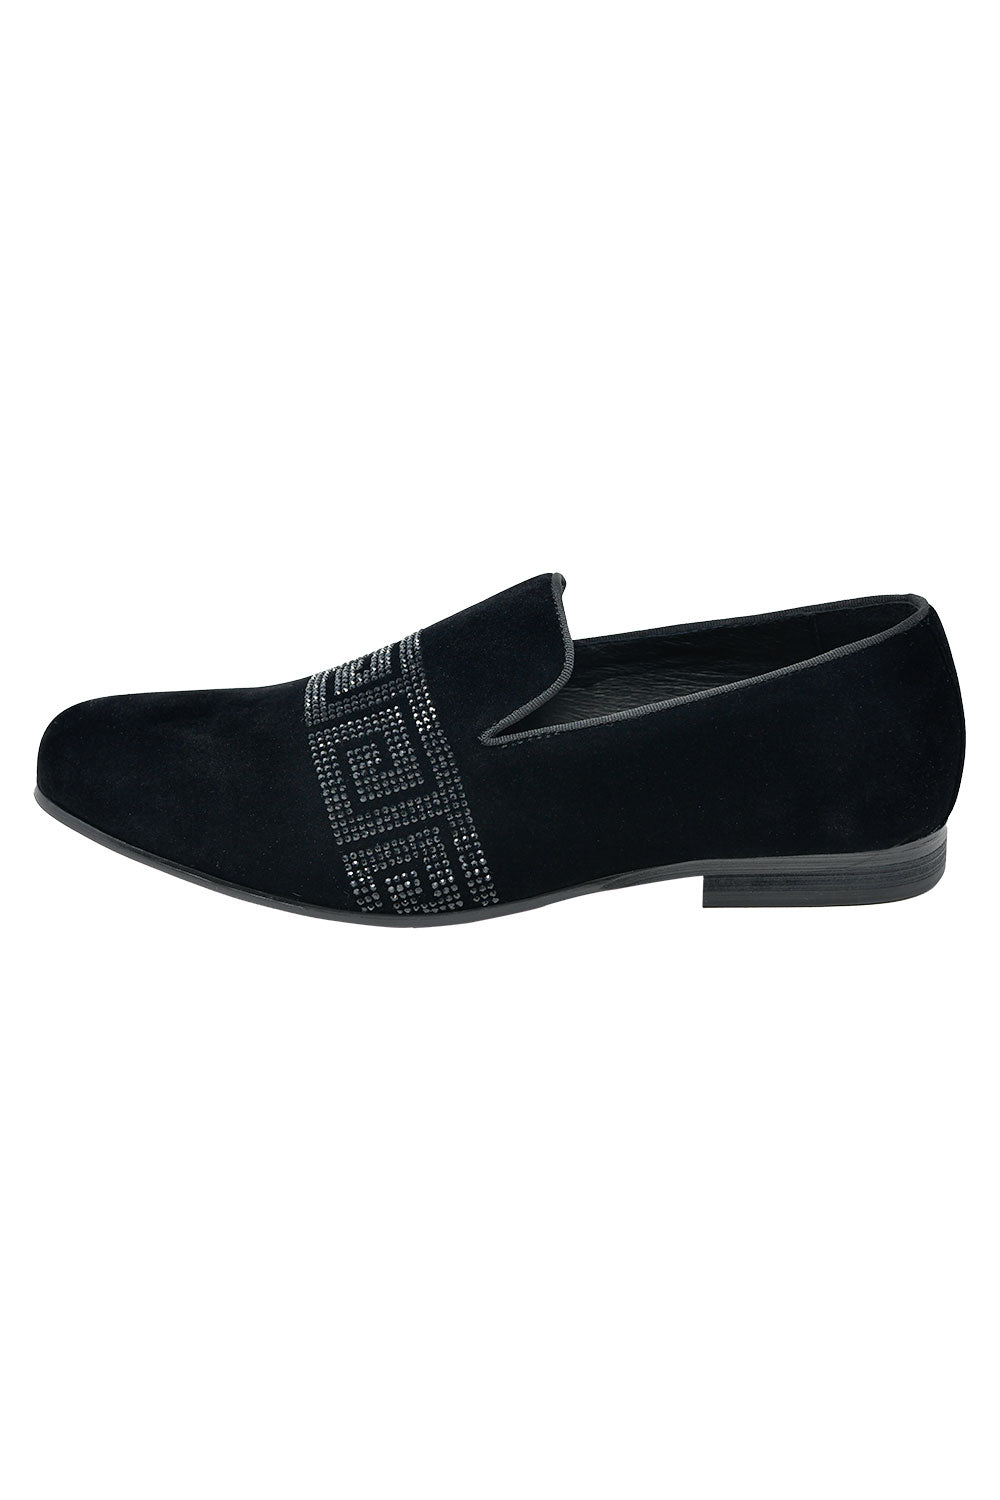 BARABAS Men's Rhinestone Greek key Pattern Slip On Dress Shoes SH3067 Black Black